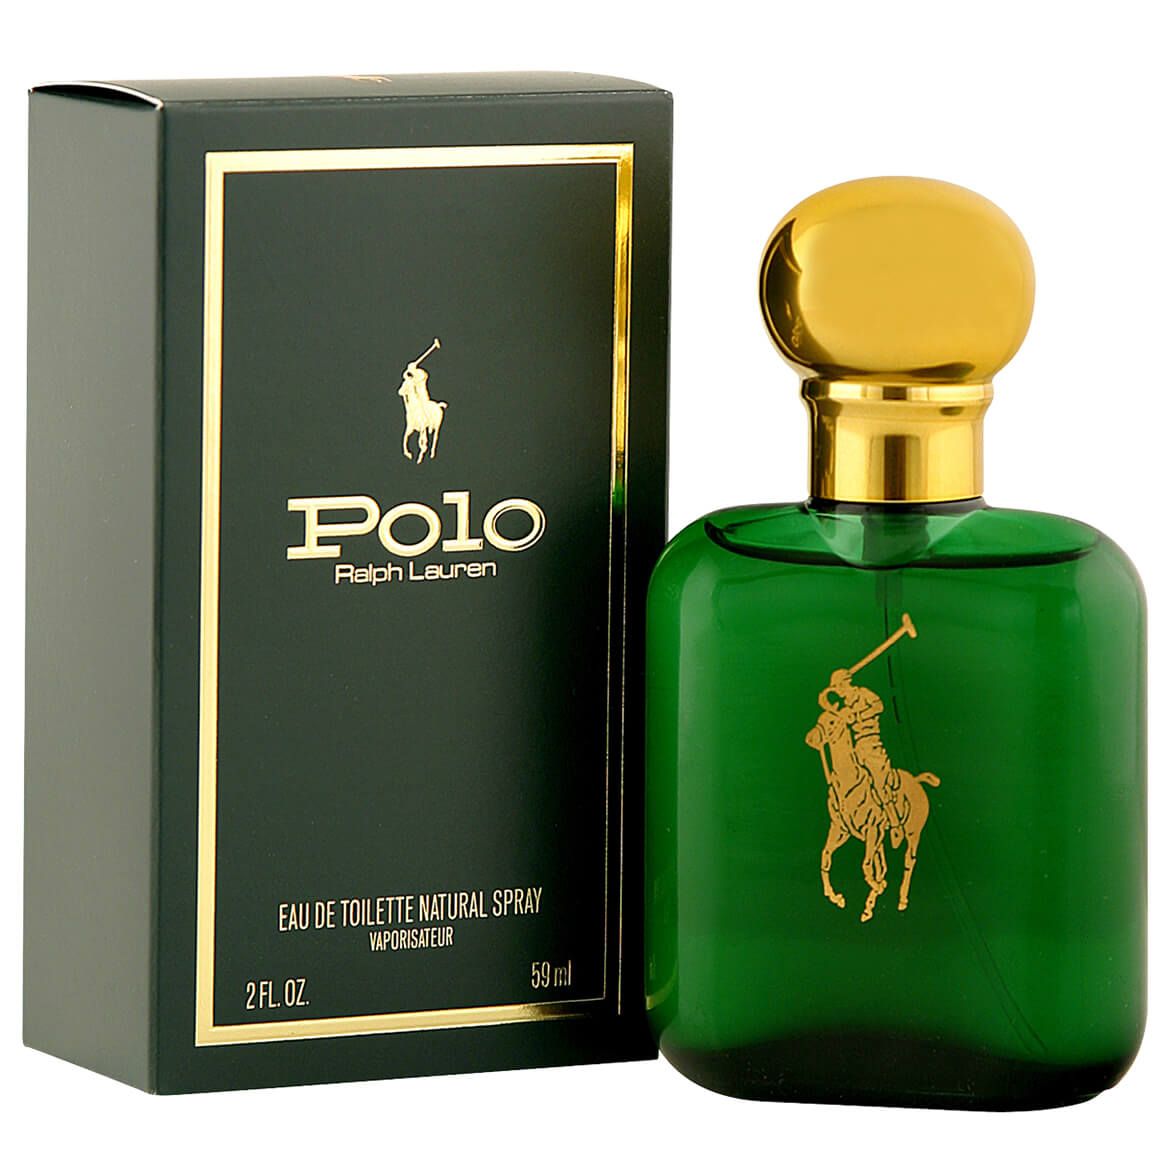 Polo by Ralph Lauren for Men EDT, 2 fl. oz. + '-' + 377142